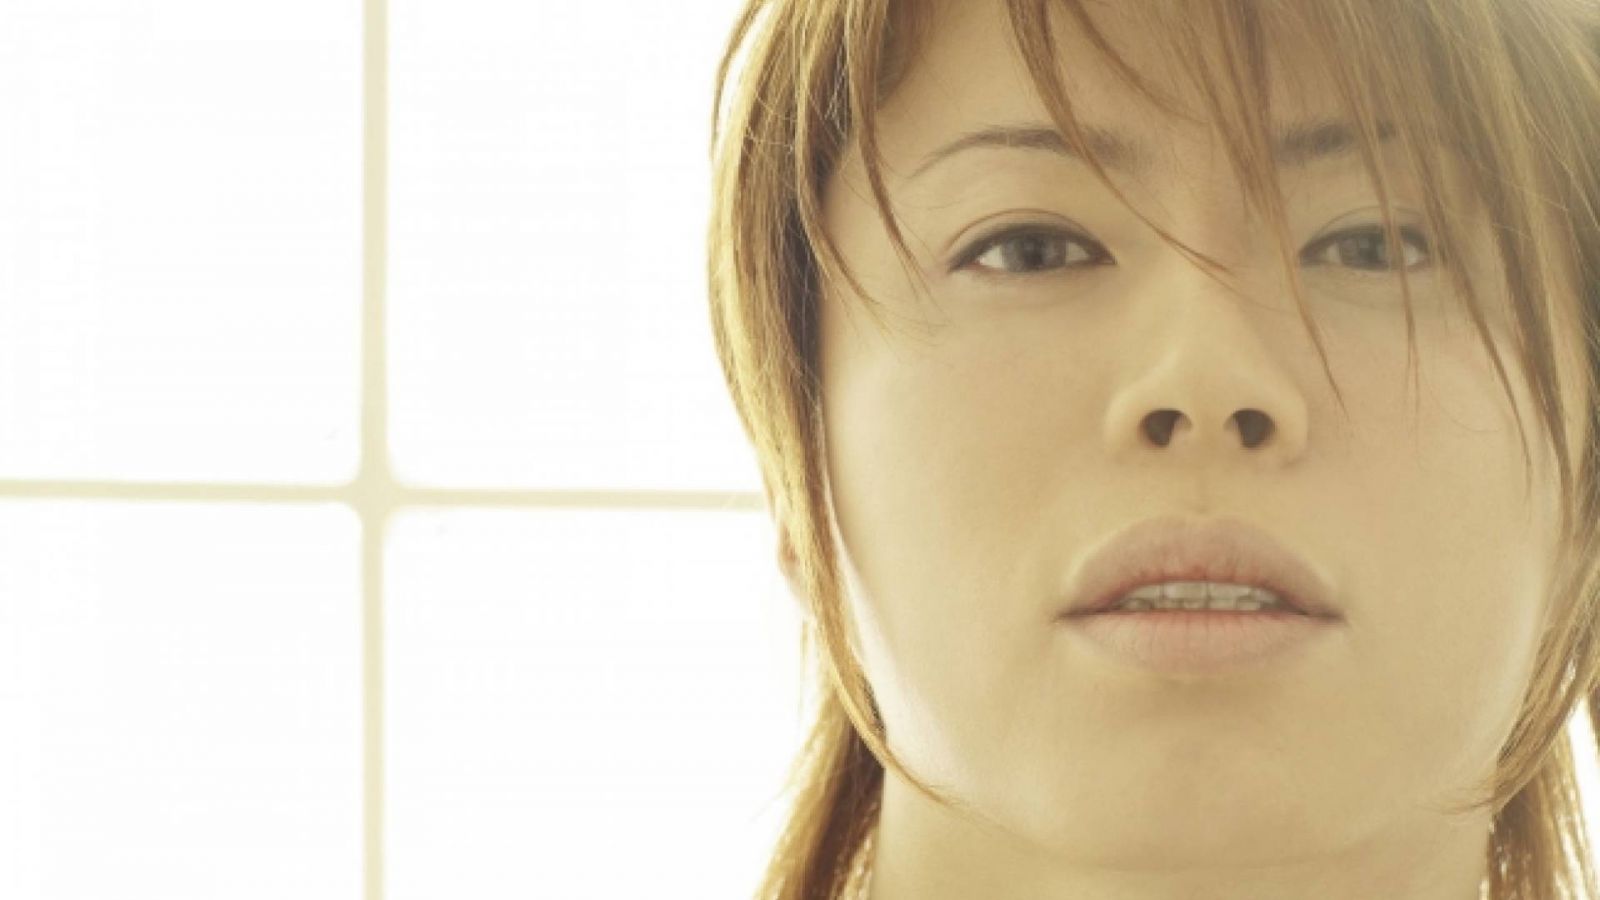 Des problèmes vocaux pour Takanori Nishikawa © Sony Music Entertainment (Japan) Inc.